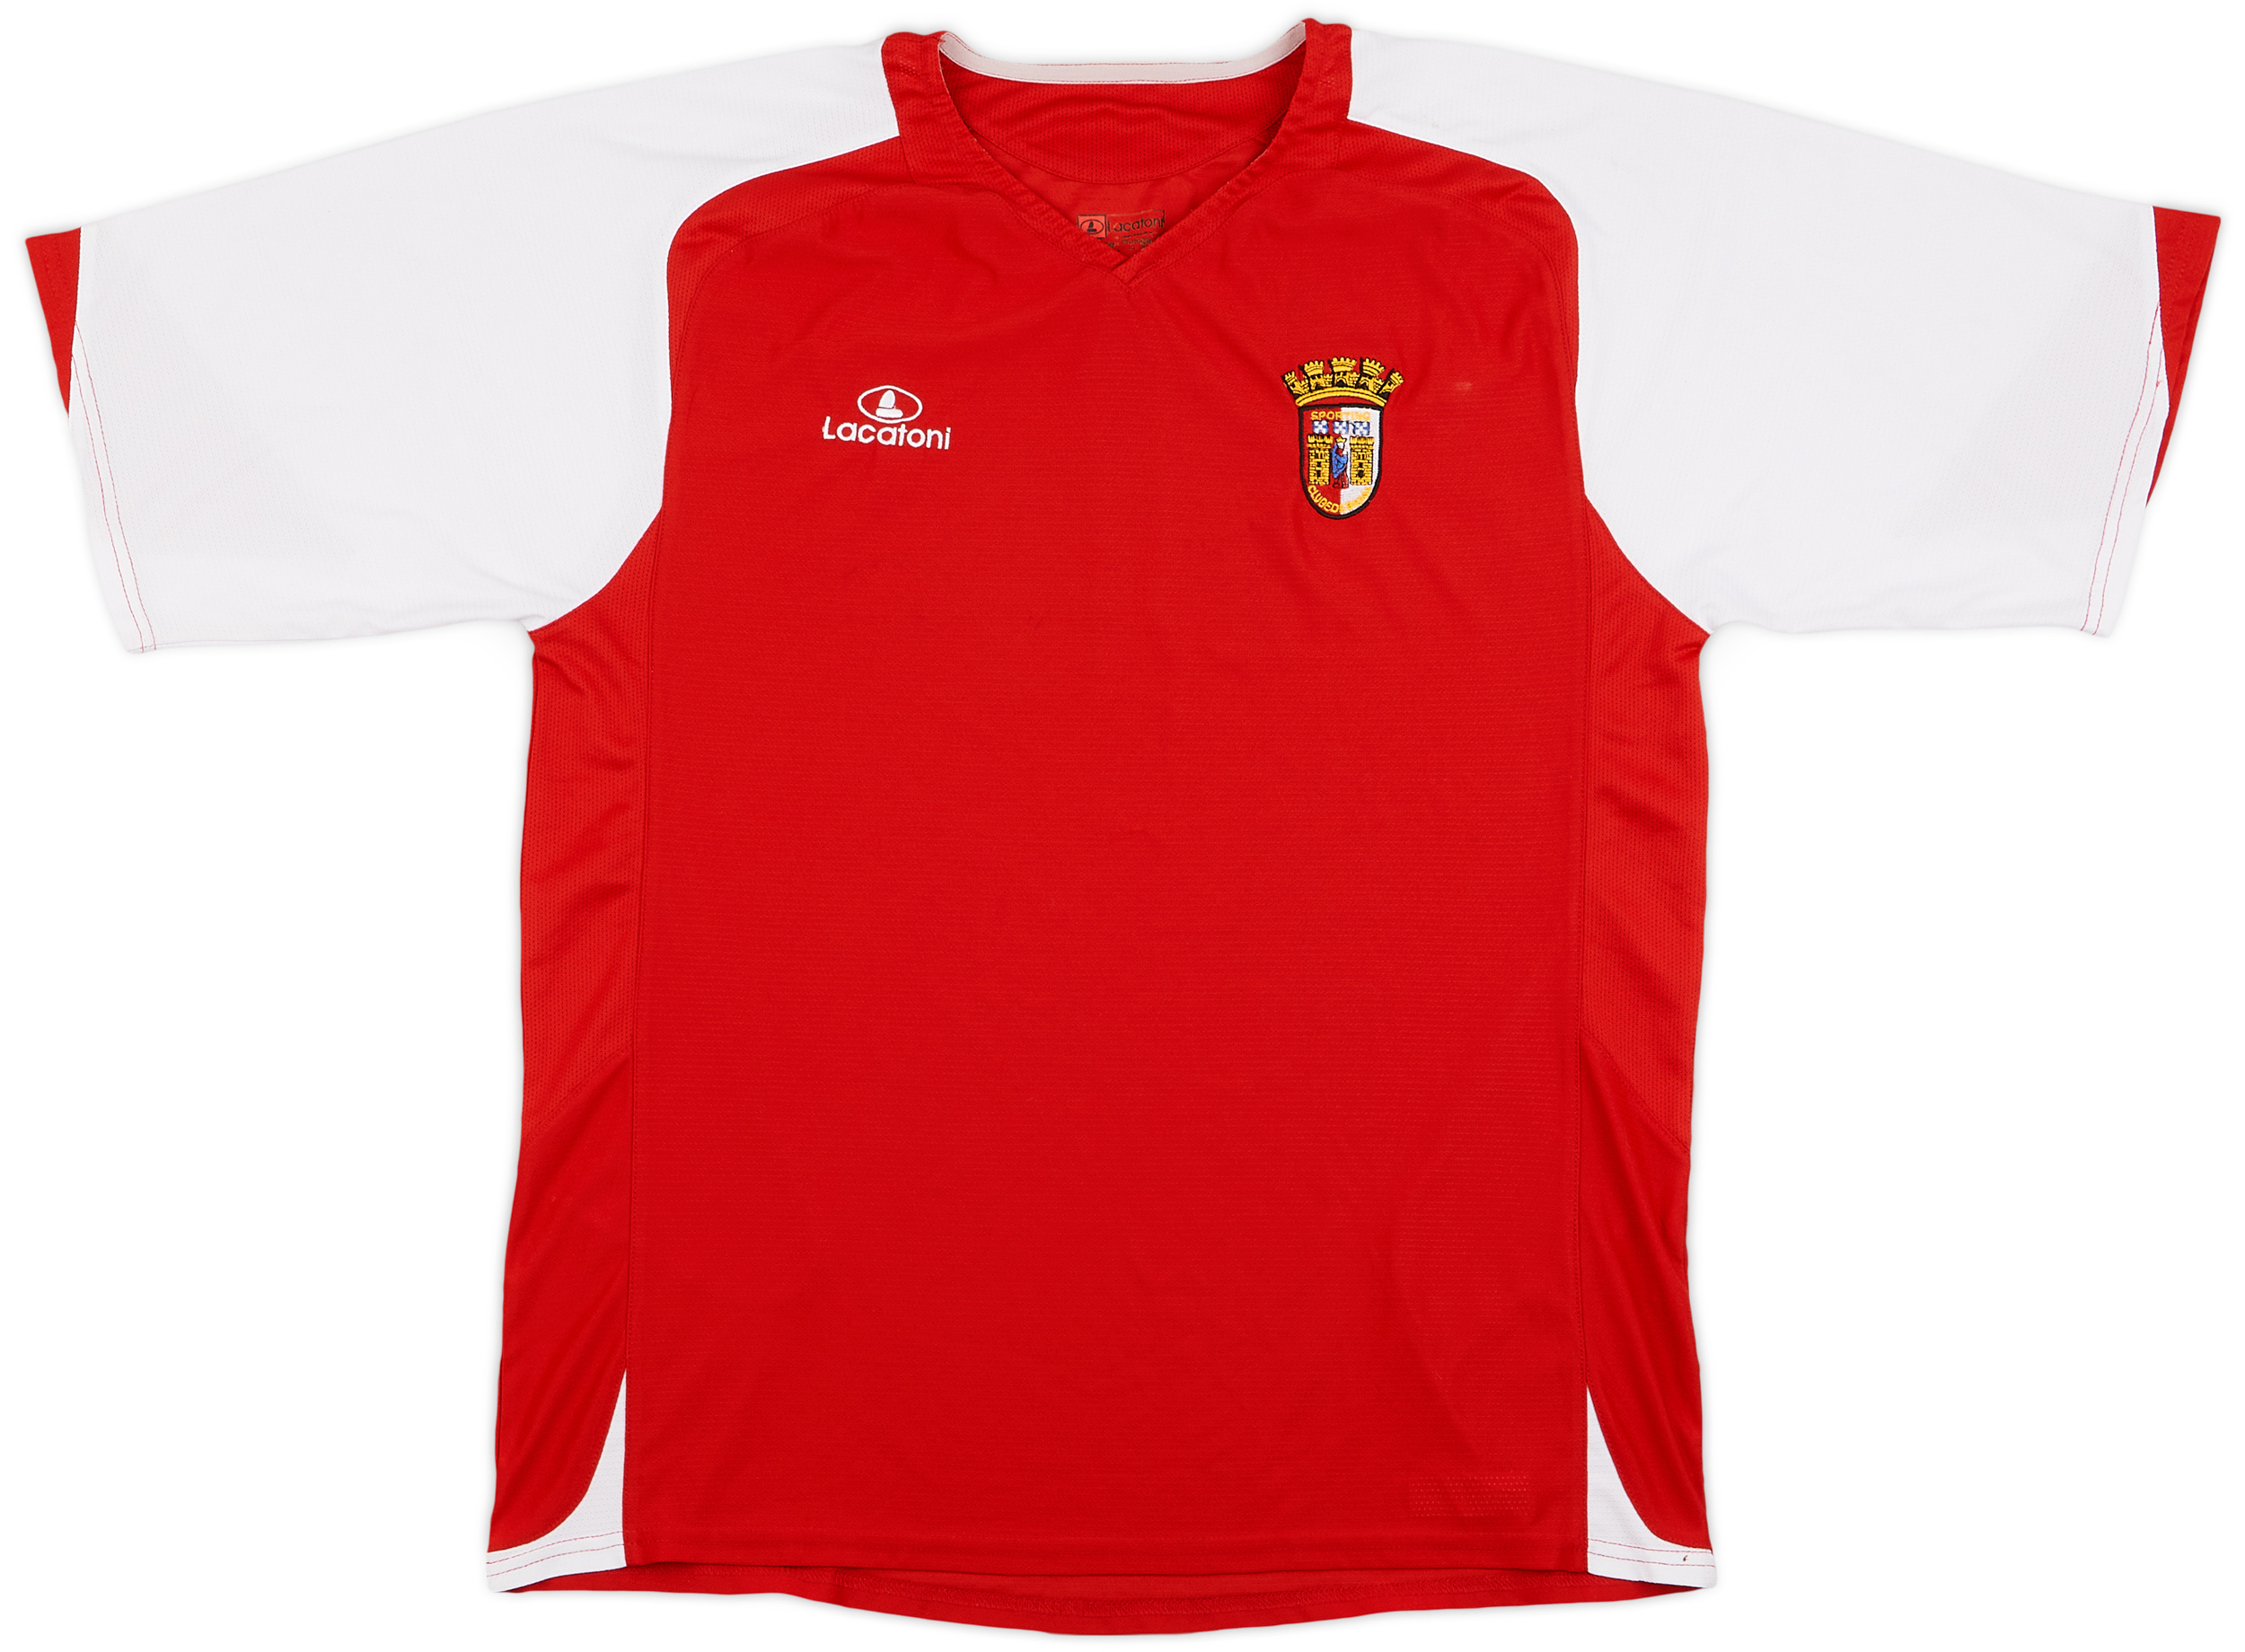 Retro Braga Shirt